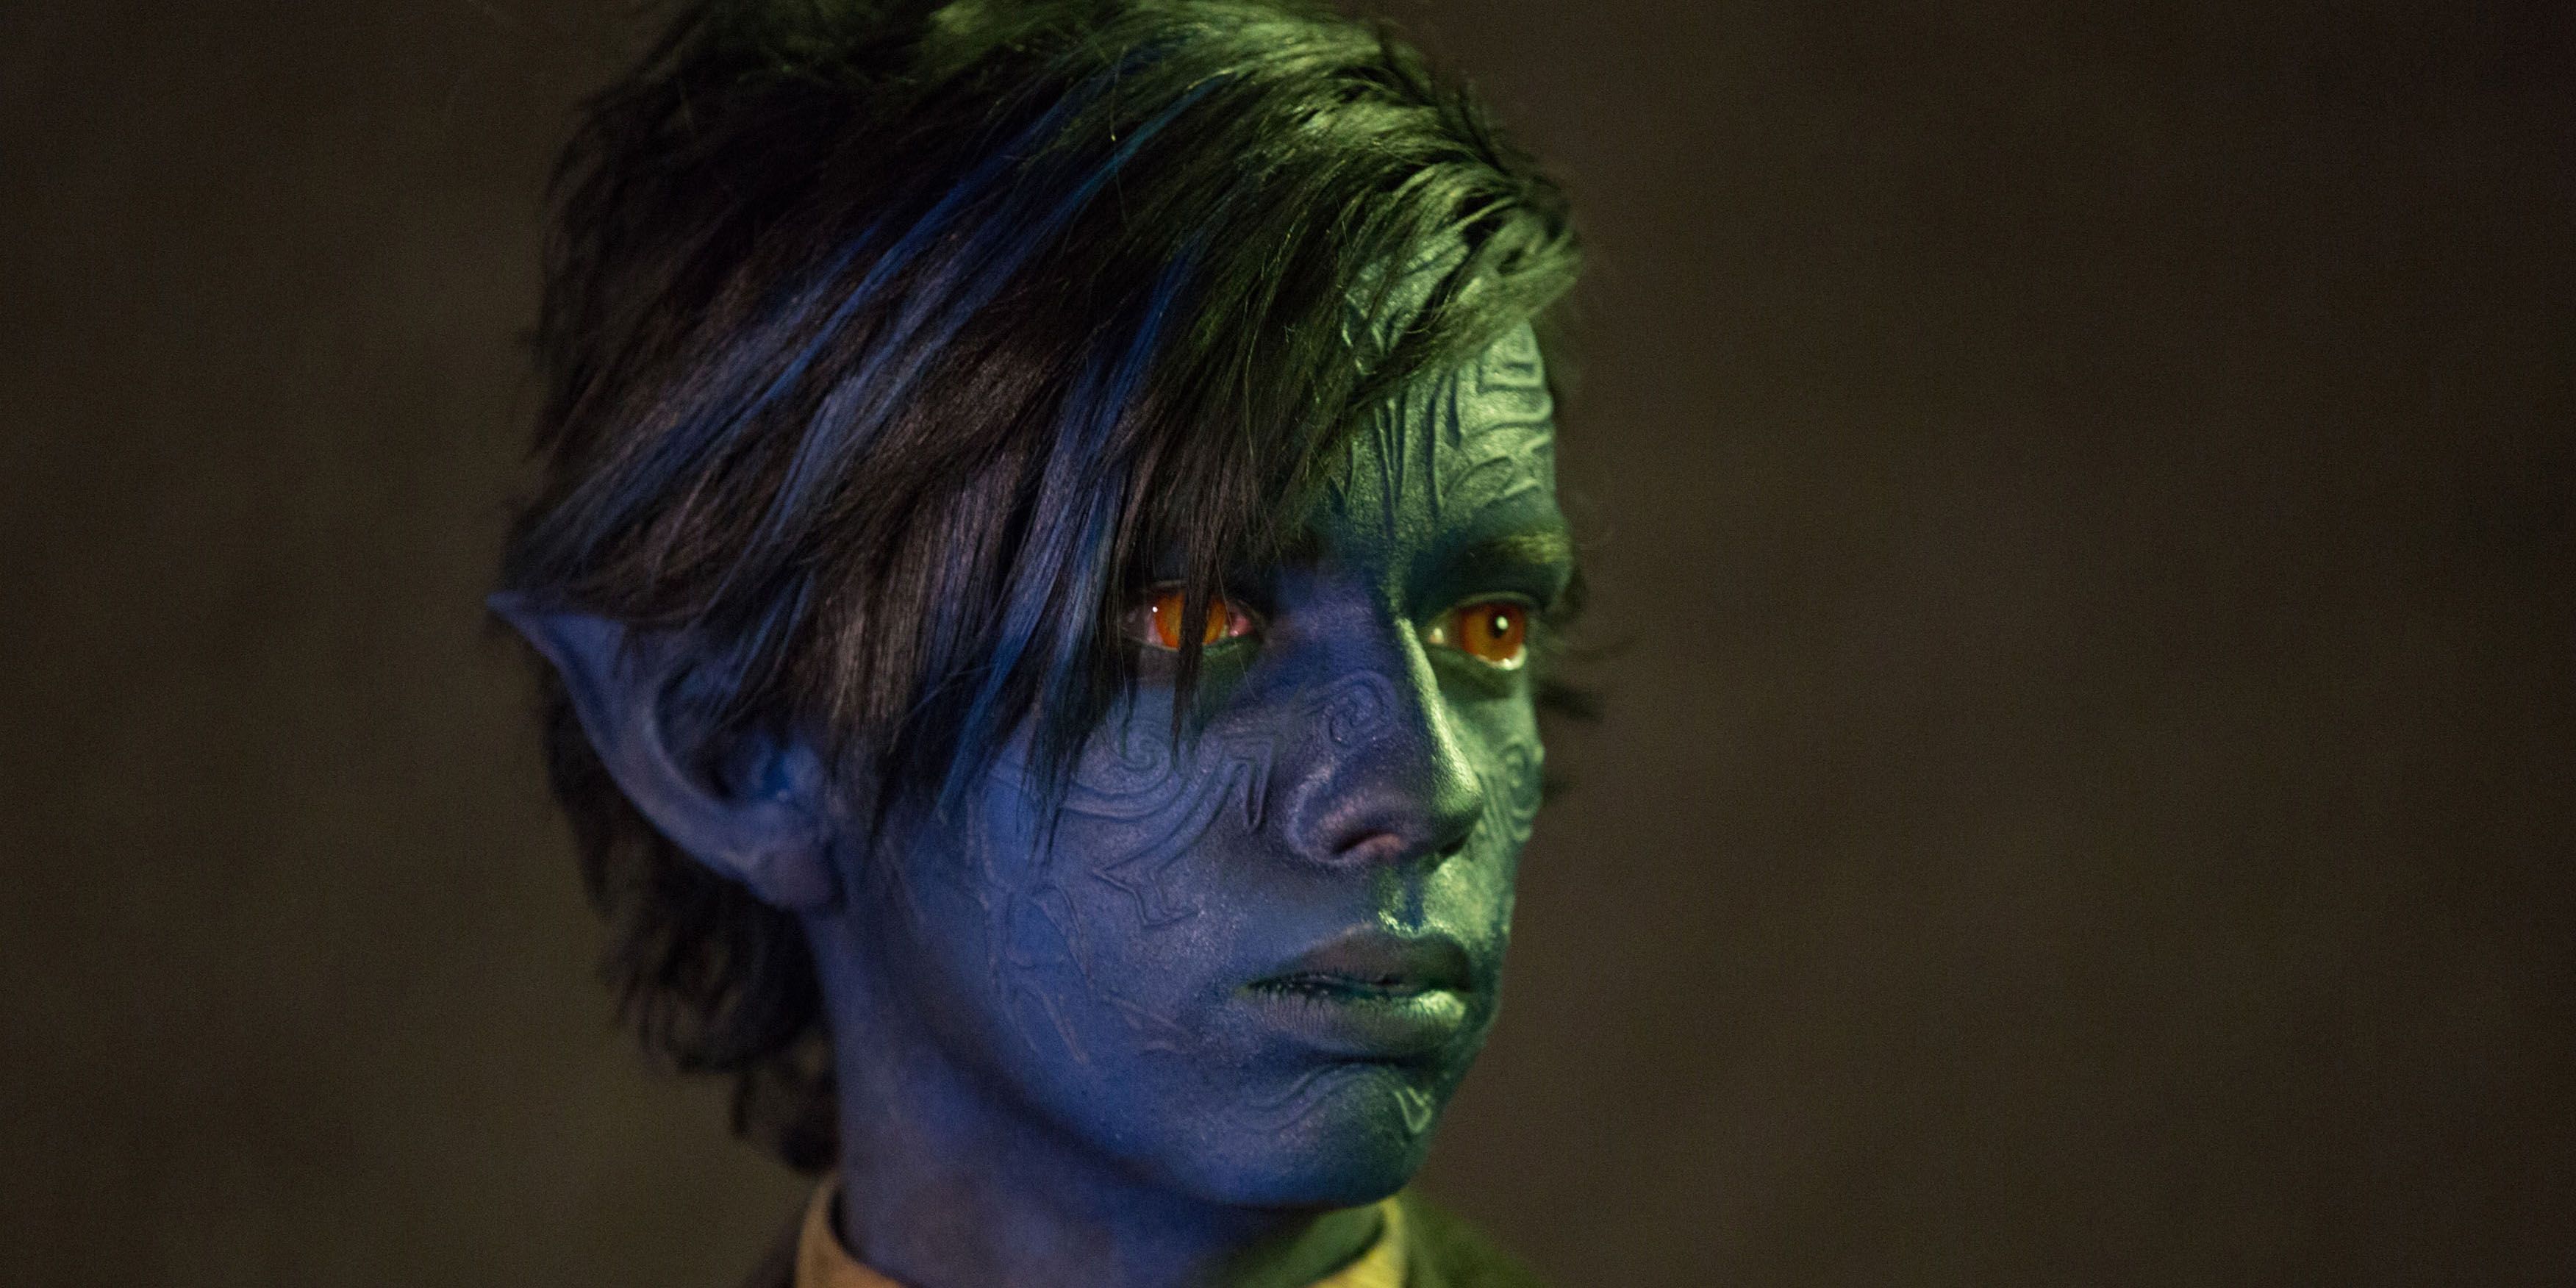 Kodi Smit-McPhee as Nightcrawler in the X-Men films